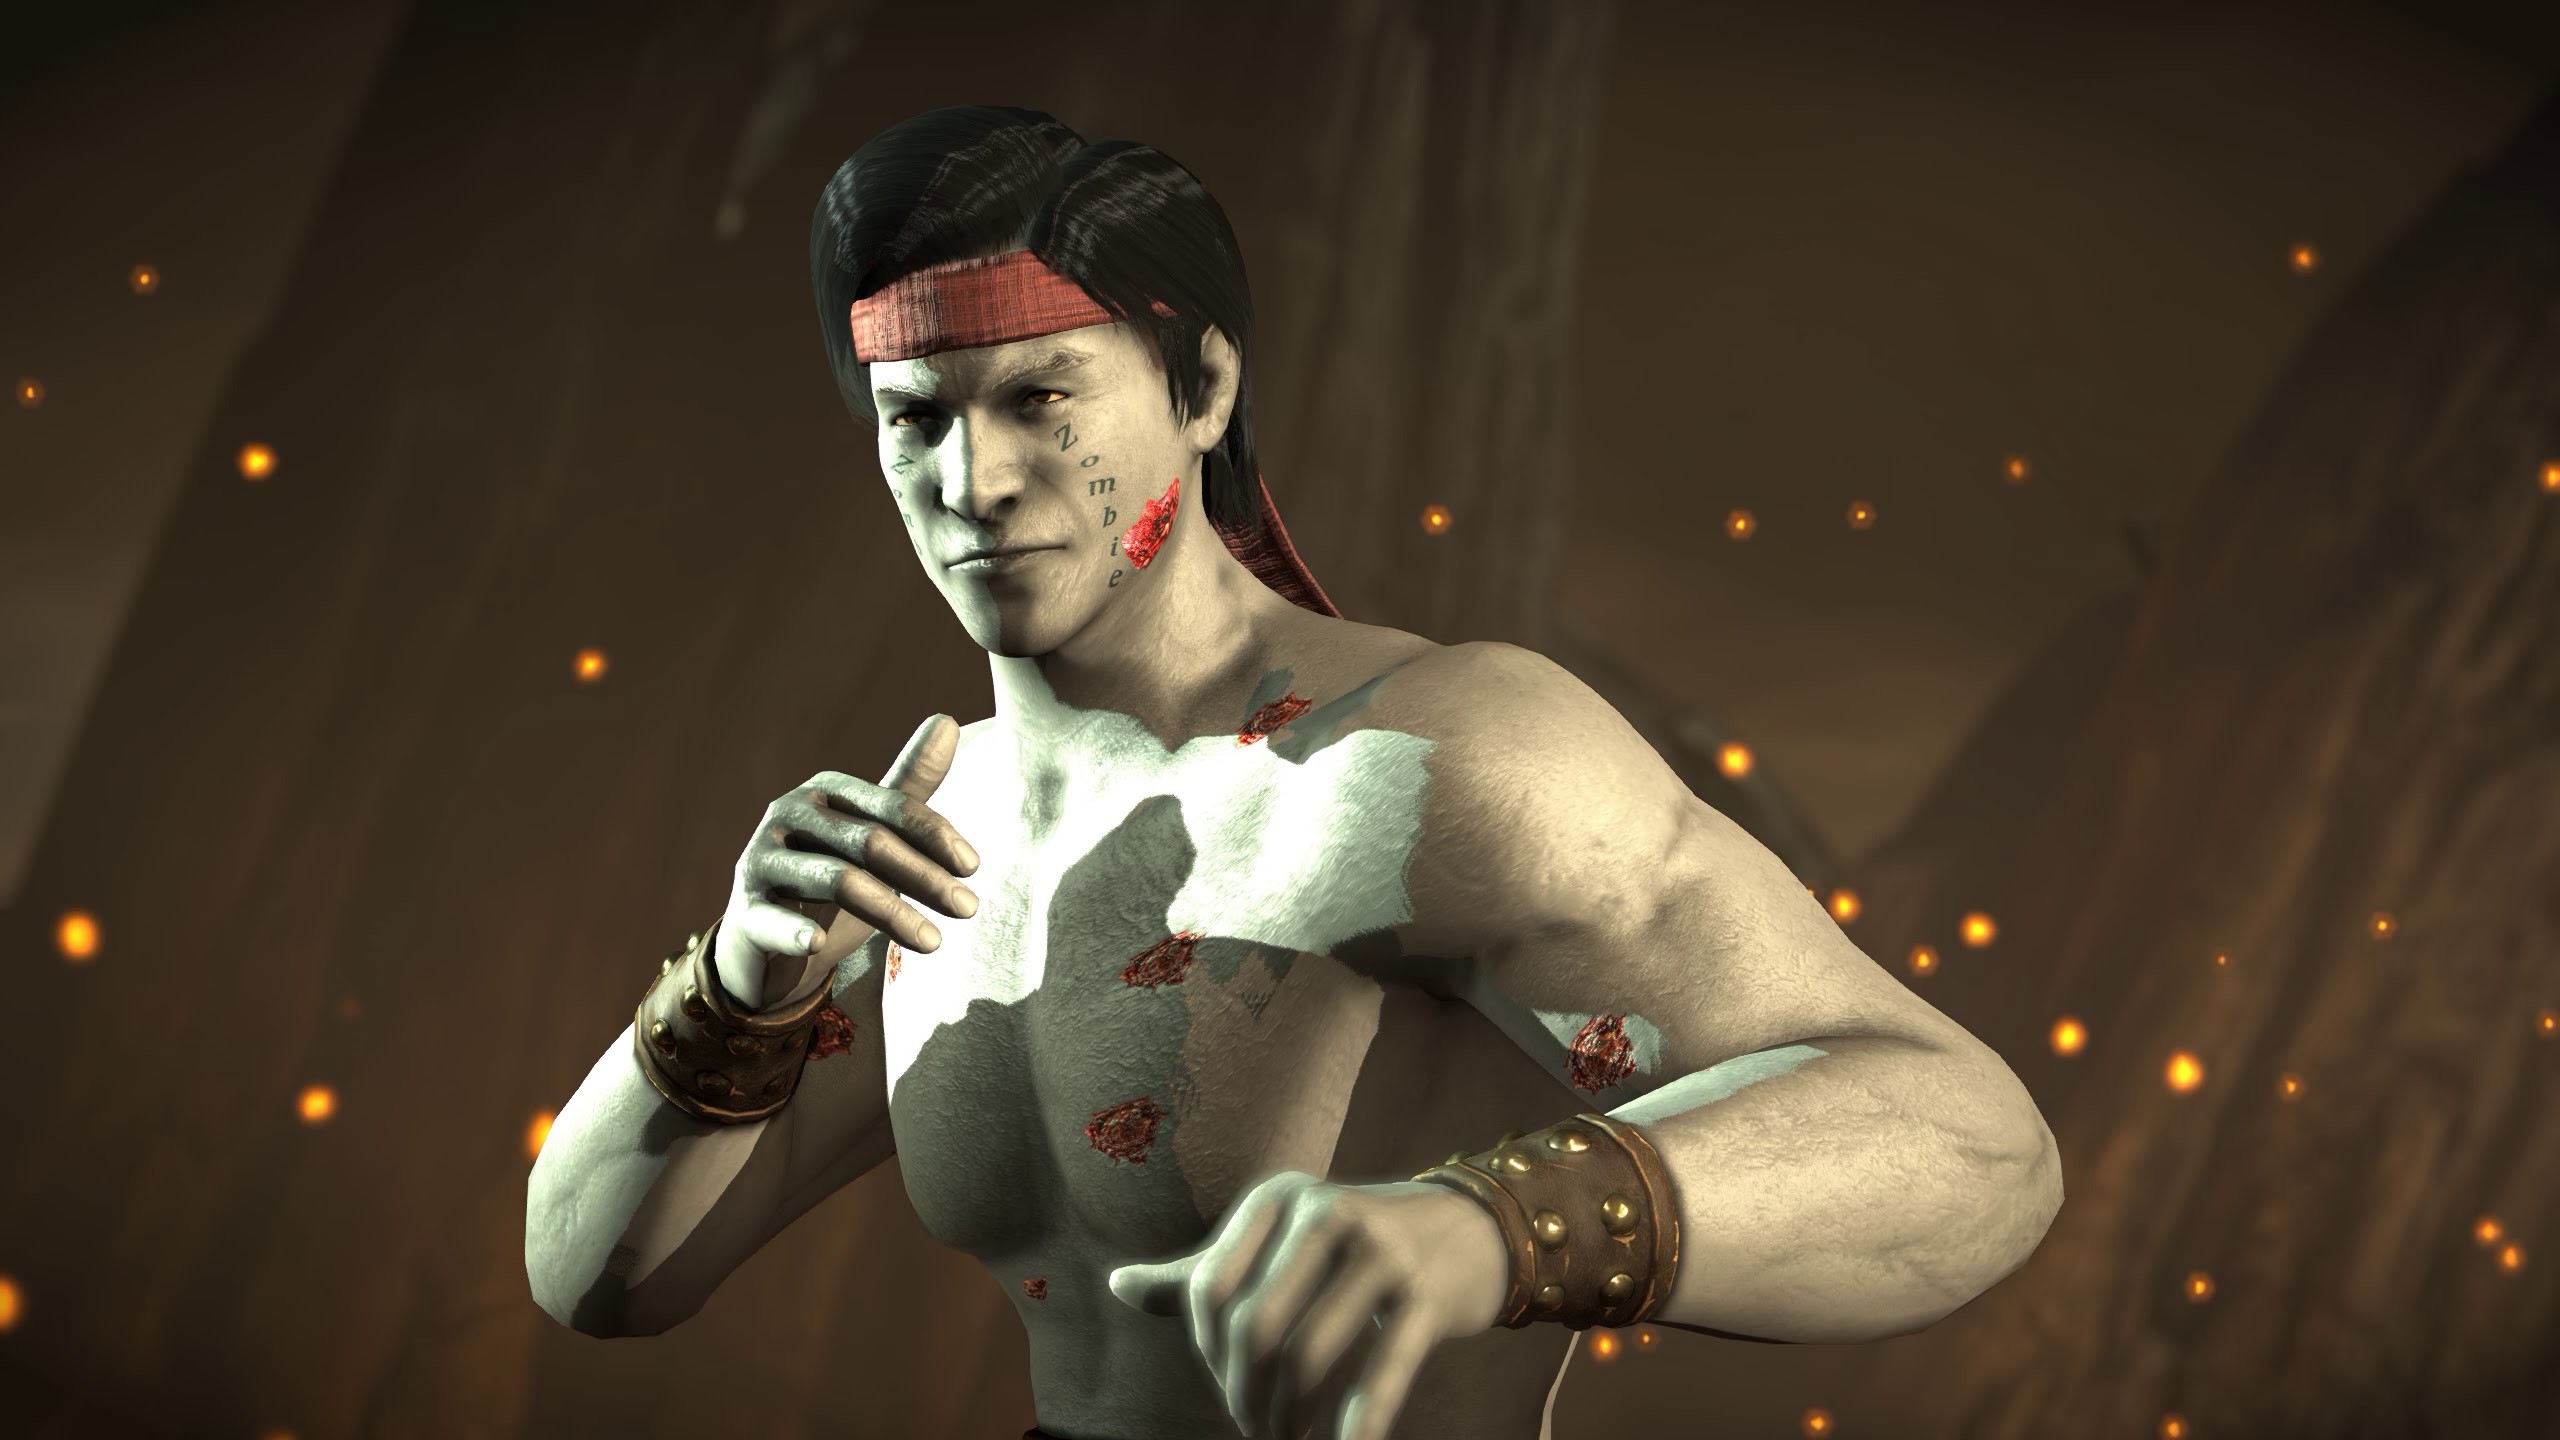 2560x1440 Mortal Kombat X PC Mod - Zombie Liu Kang Costume Intro Gameplay F...